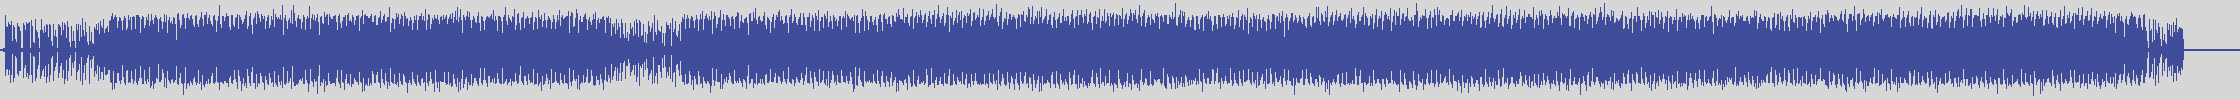 nf_boyz_records [NFY023] Tommy Dunmer - Space Vocoder [Exp] audio wave form